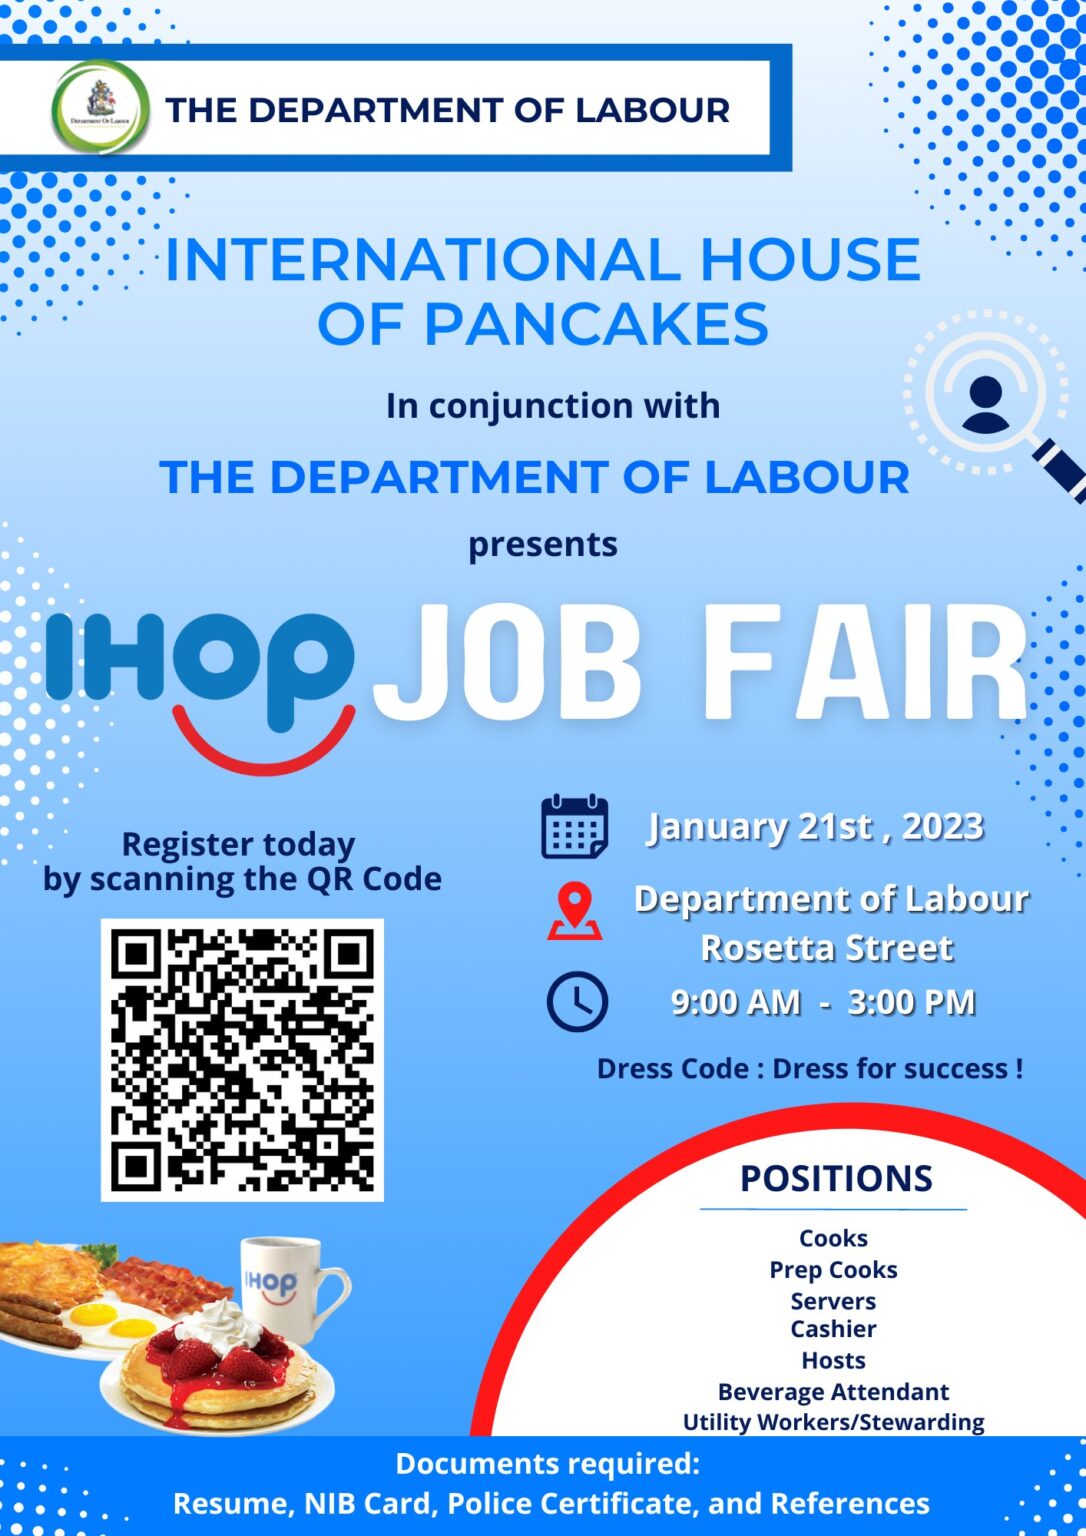 Bahamas Labour Dept. to hold first job fair of 2023 - Caribbean Employment